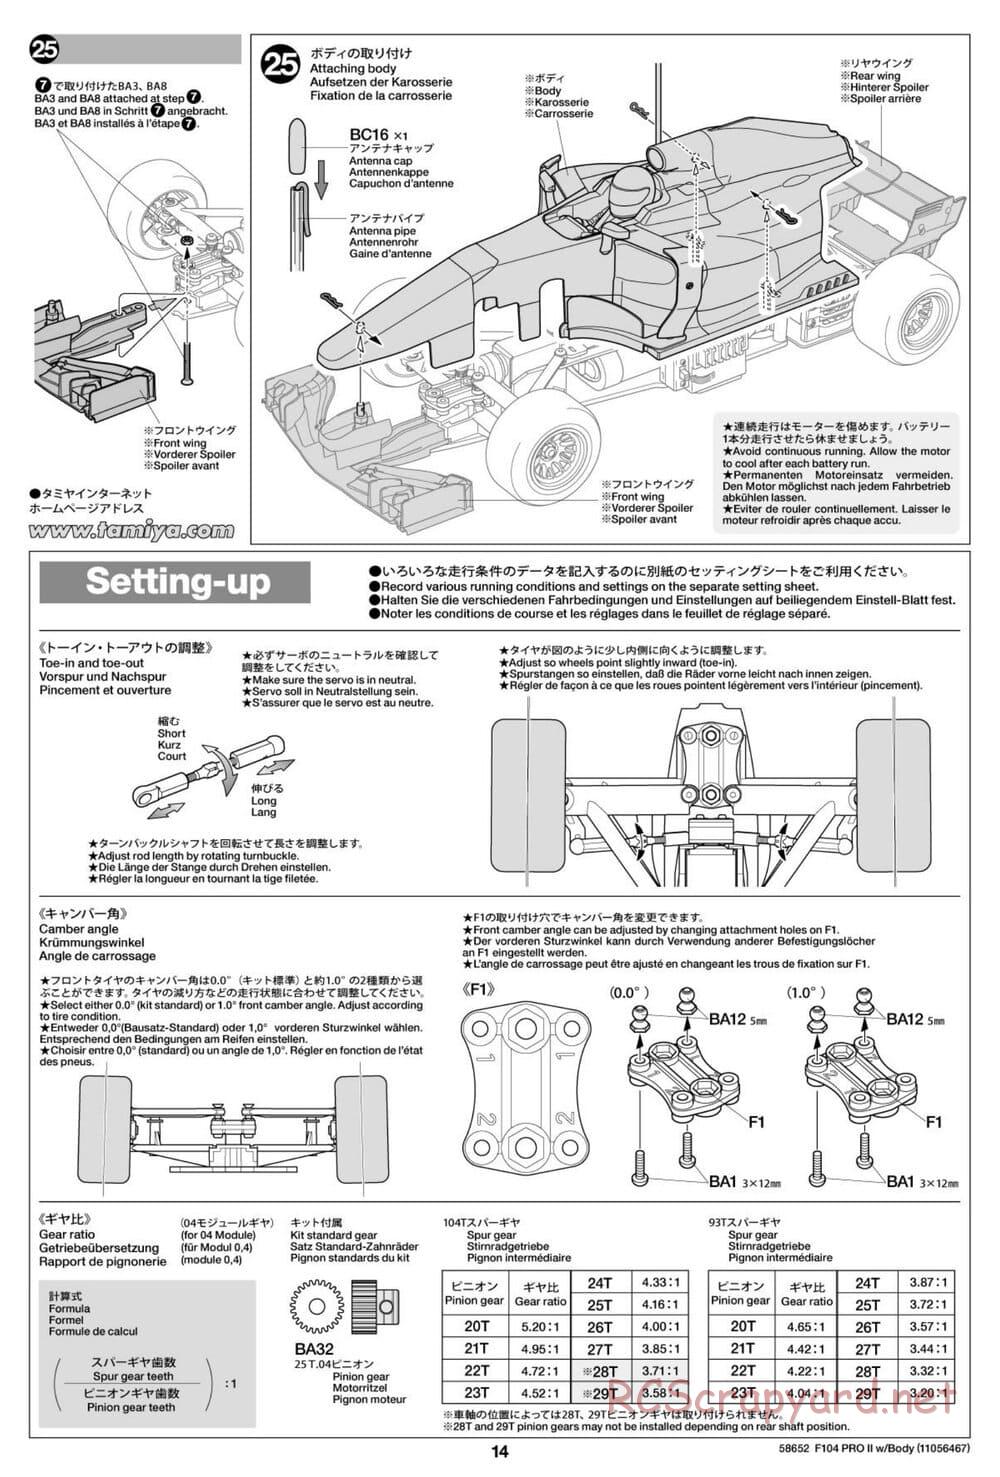 Tamiya - F104 Pro II Chassis - Manual - Page 14